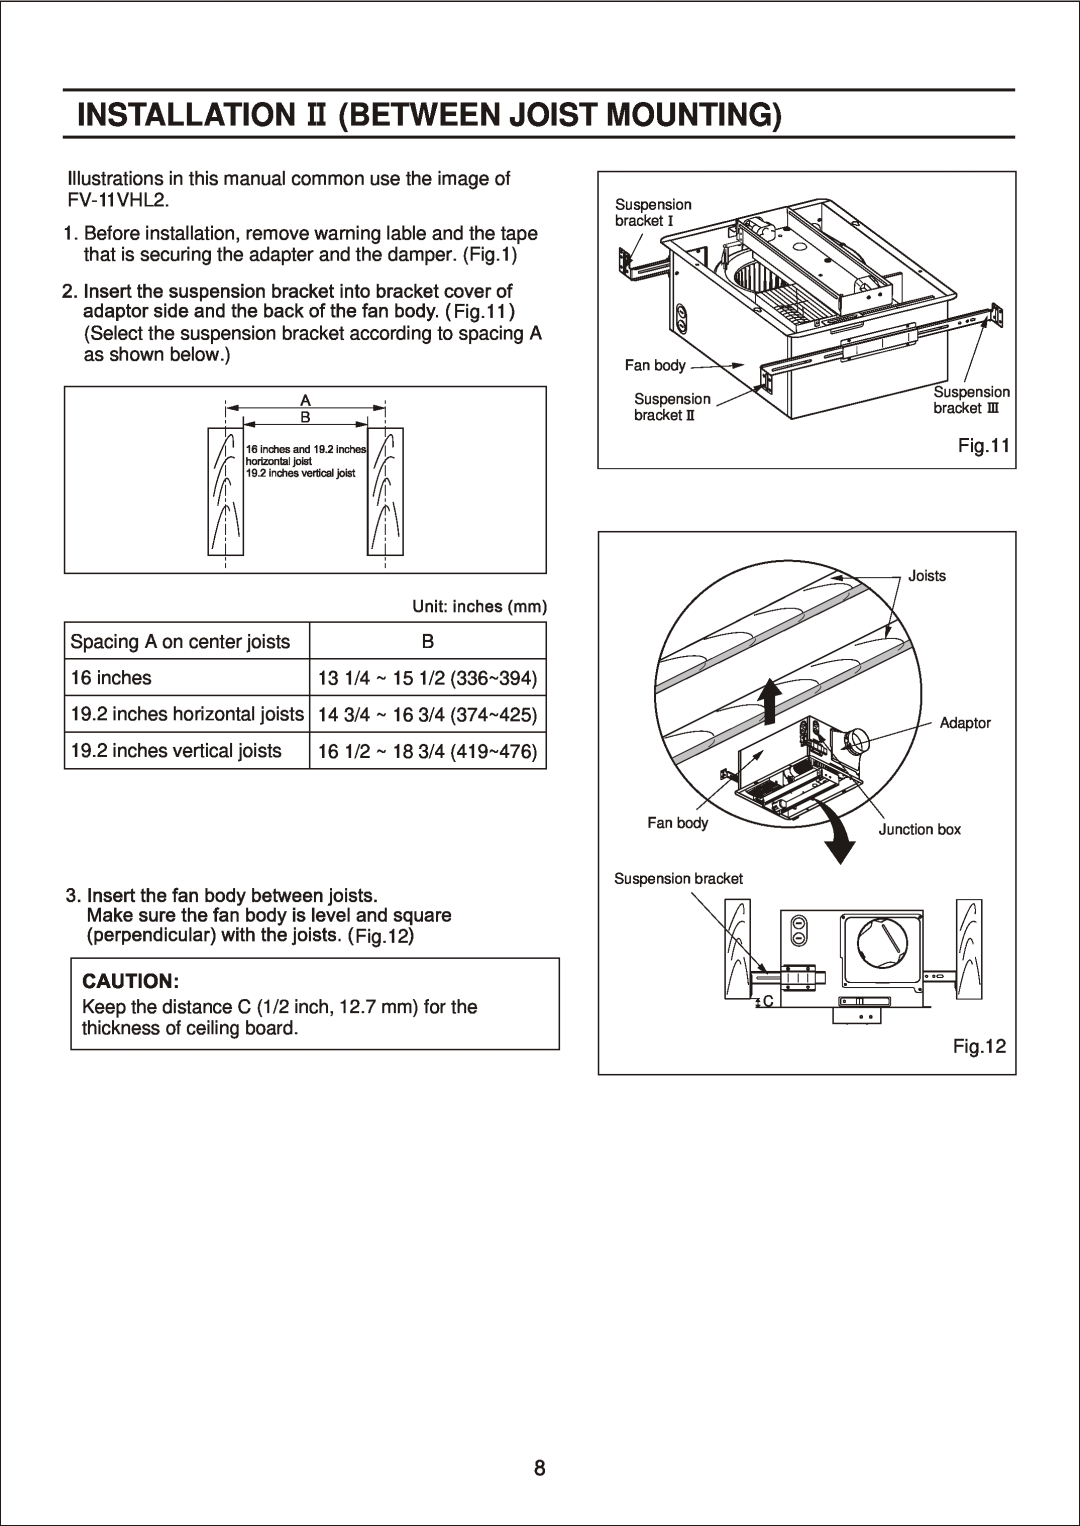 Panasonic FV-11VH2, FV-11VHL2 manual Installation Between Joist Mounting 